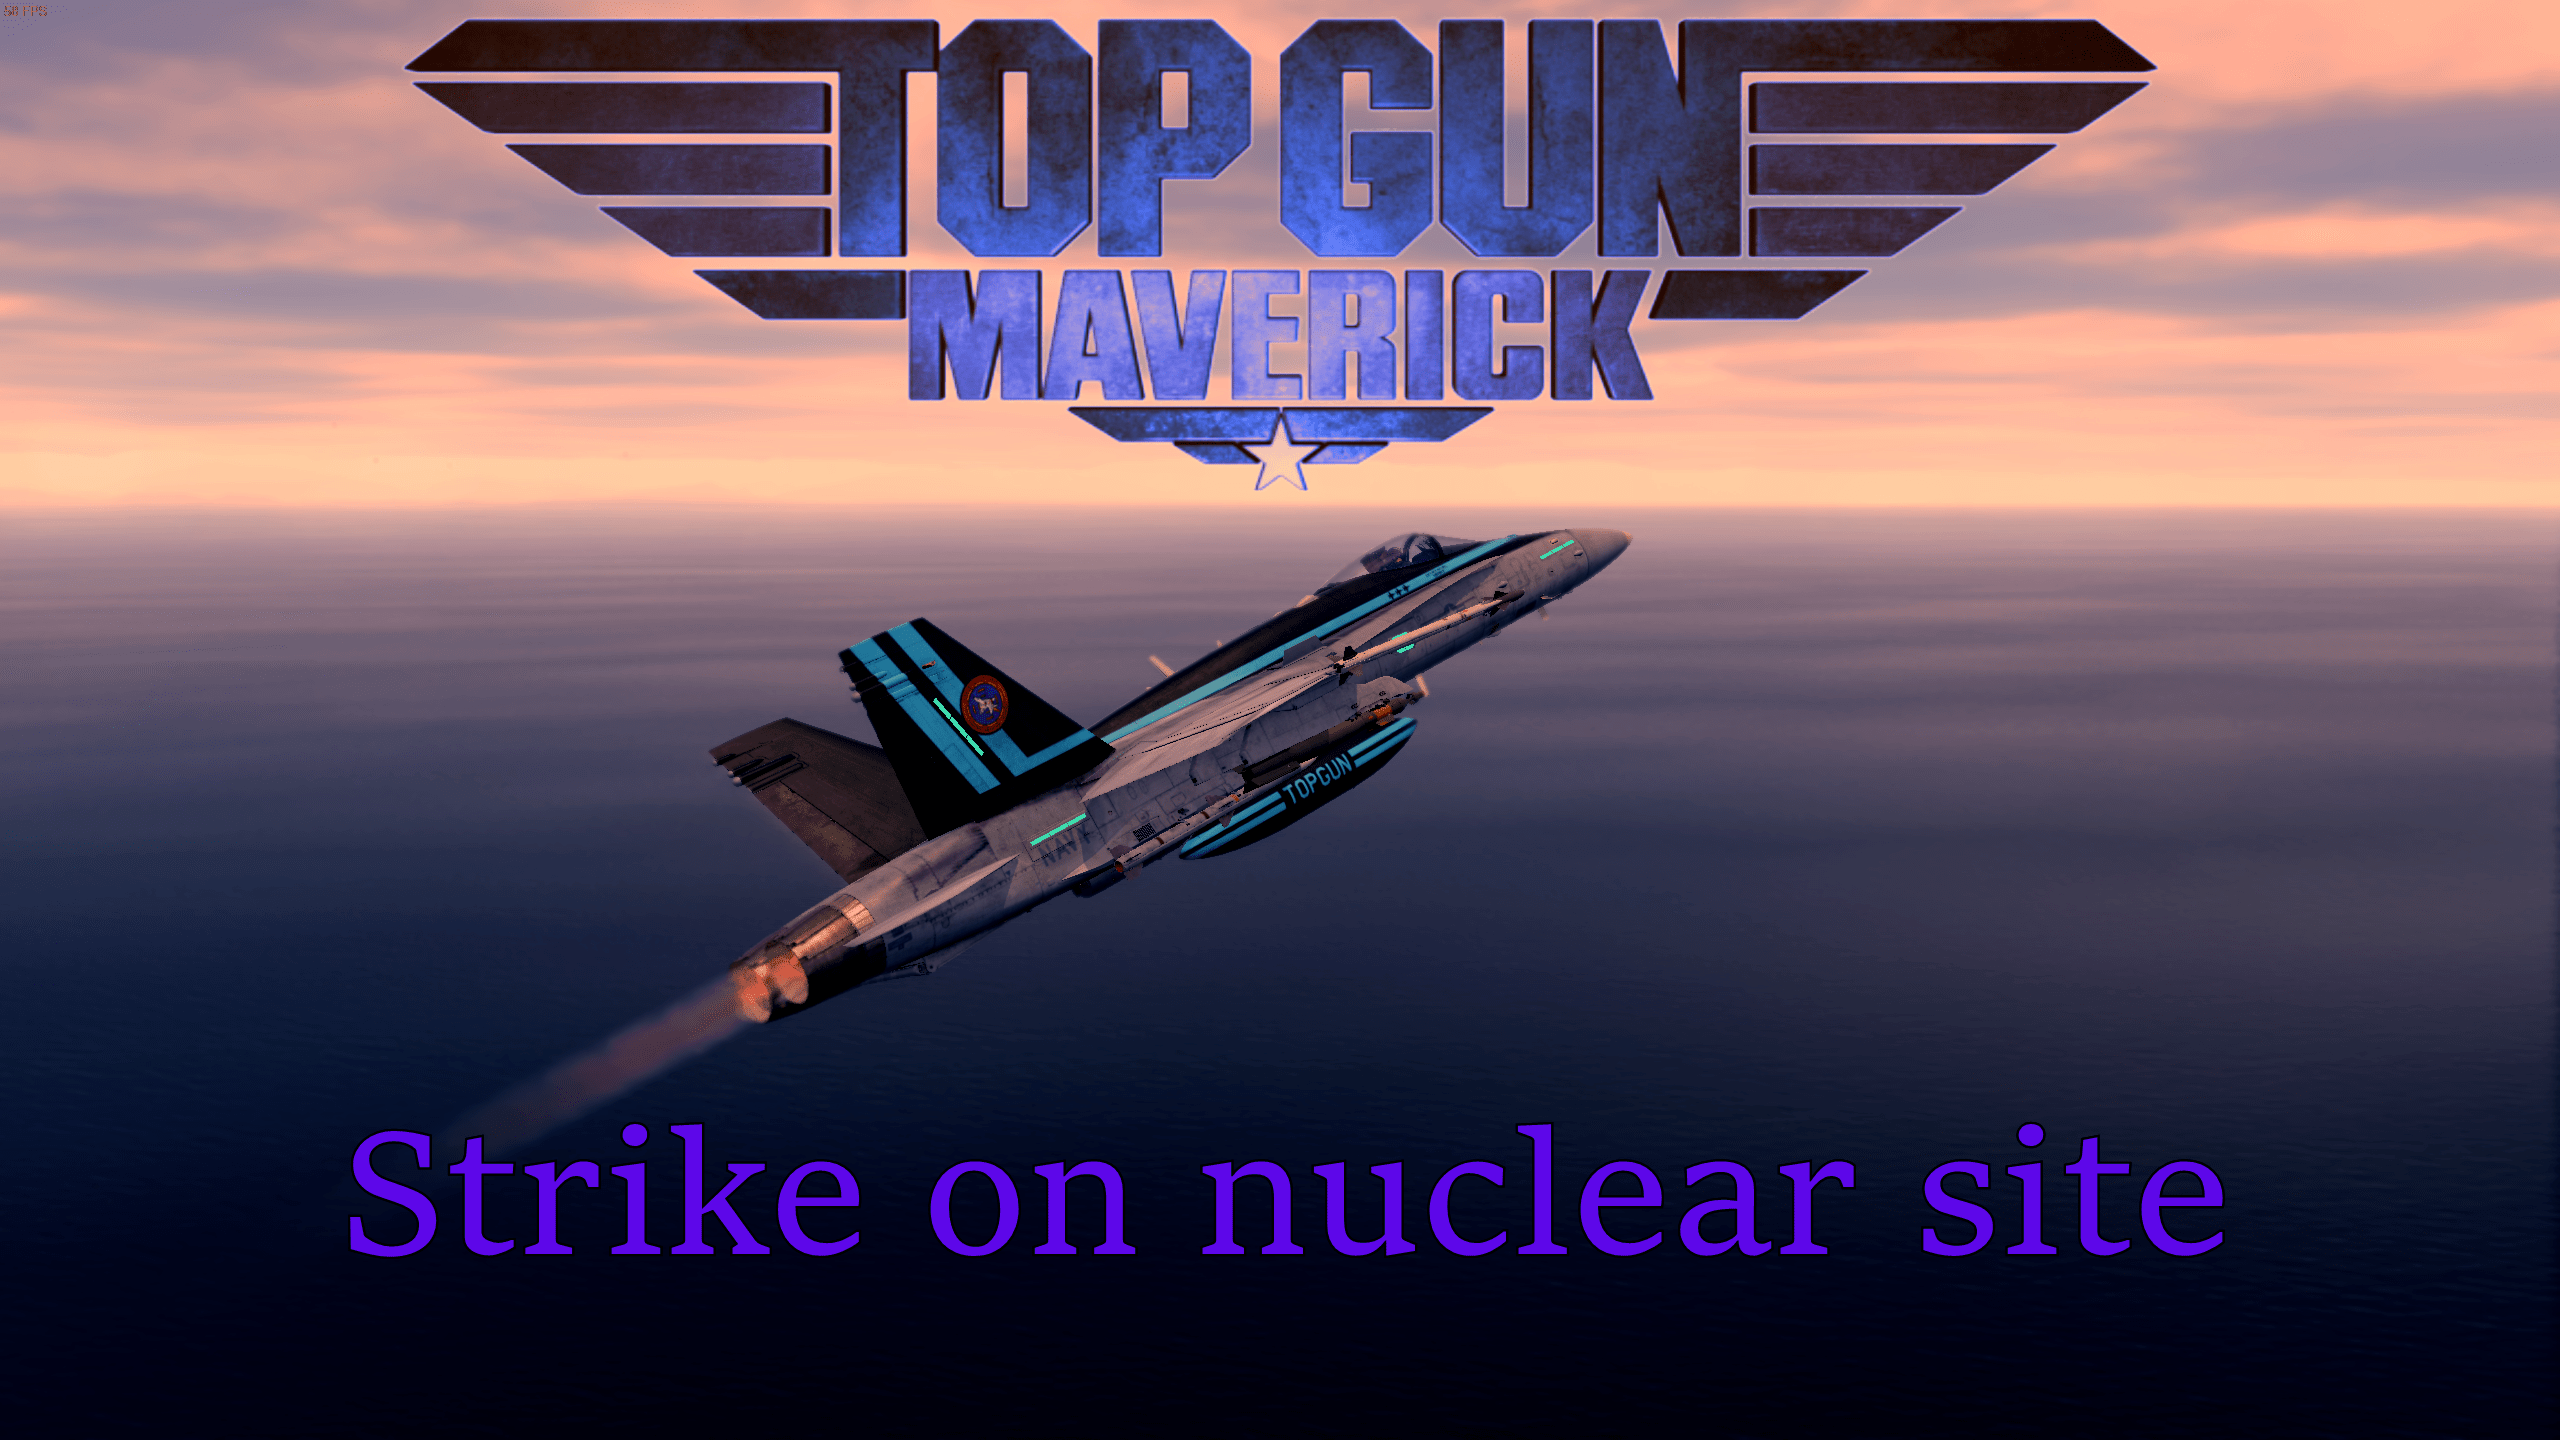 Top Gun: Maverick | The mission impossible - Attack on uranium site